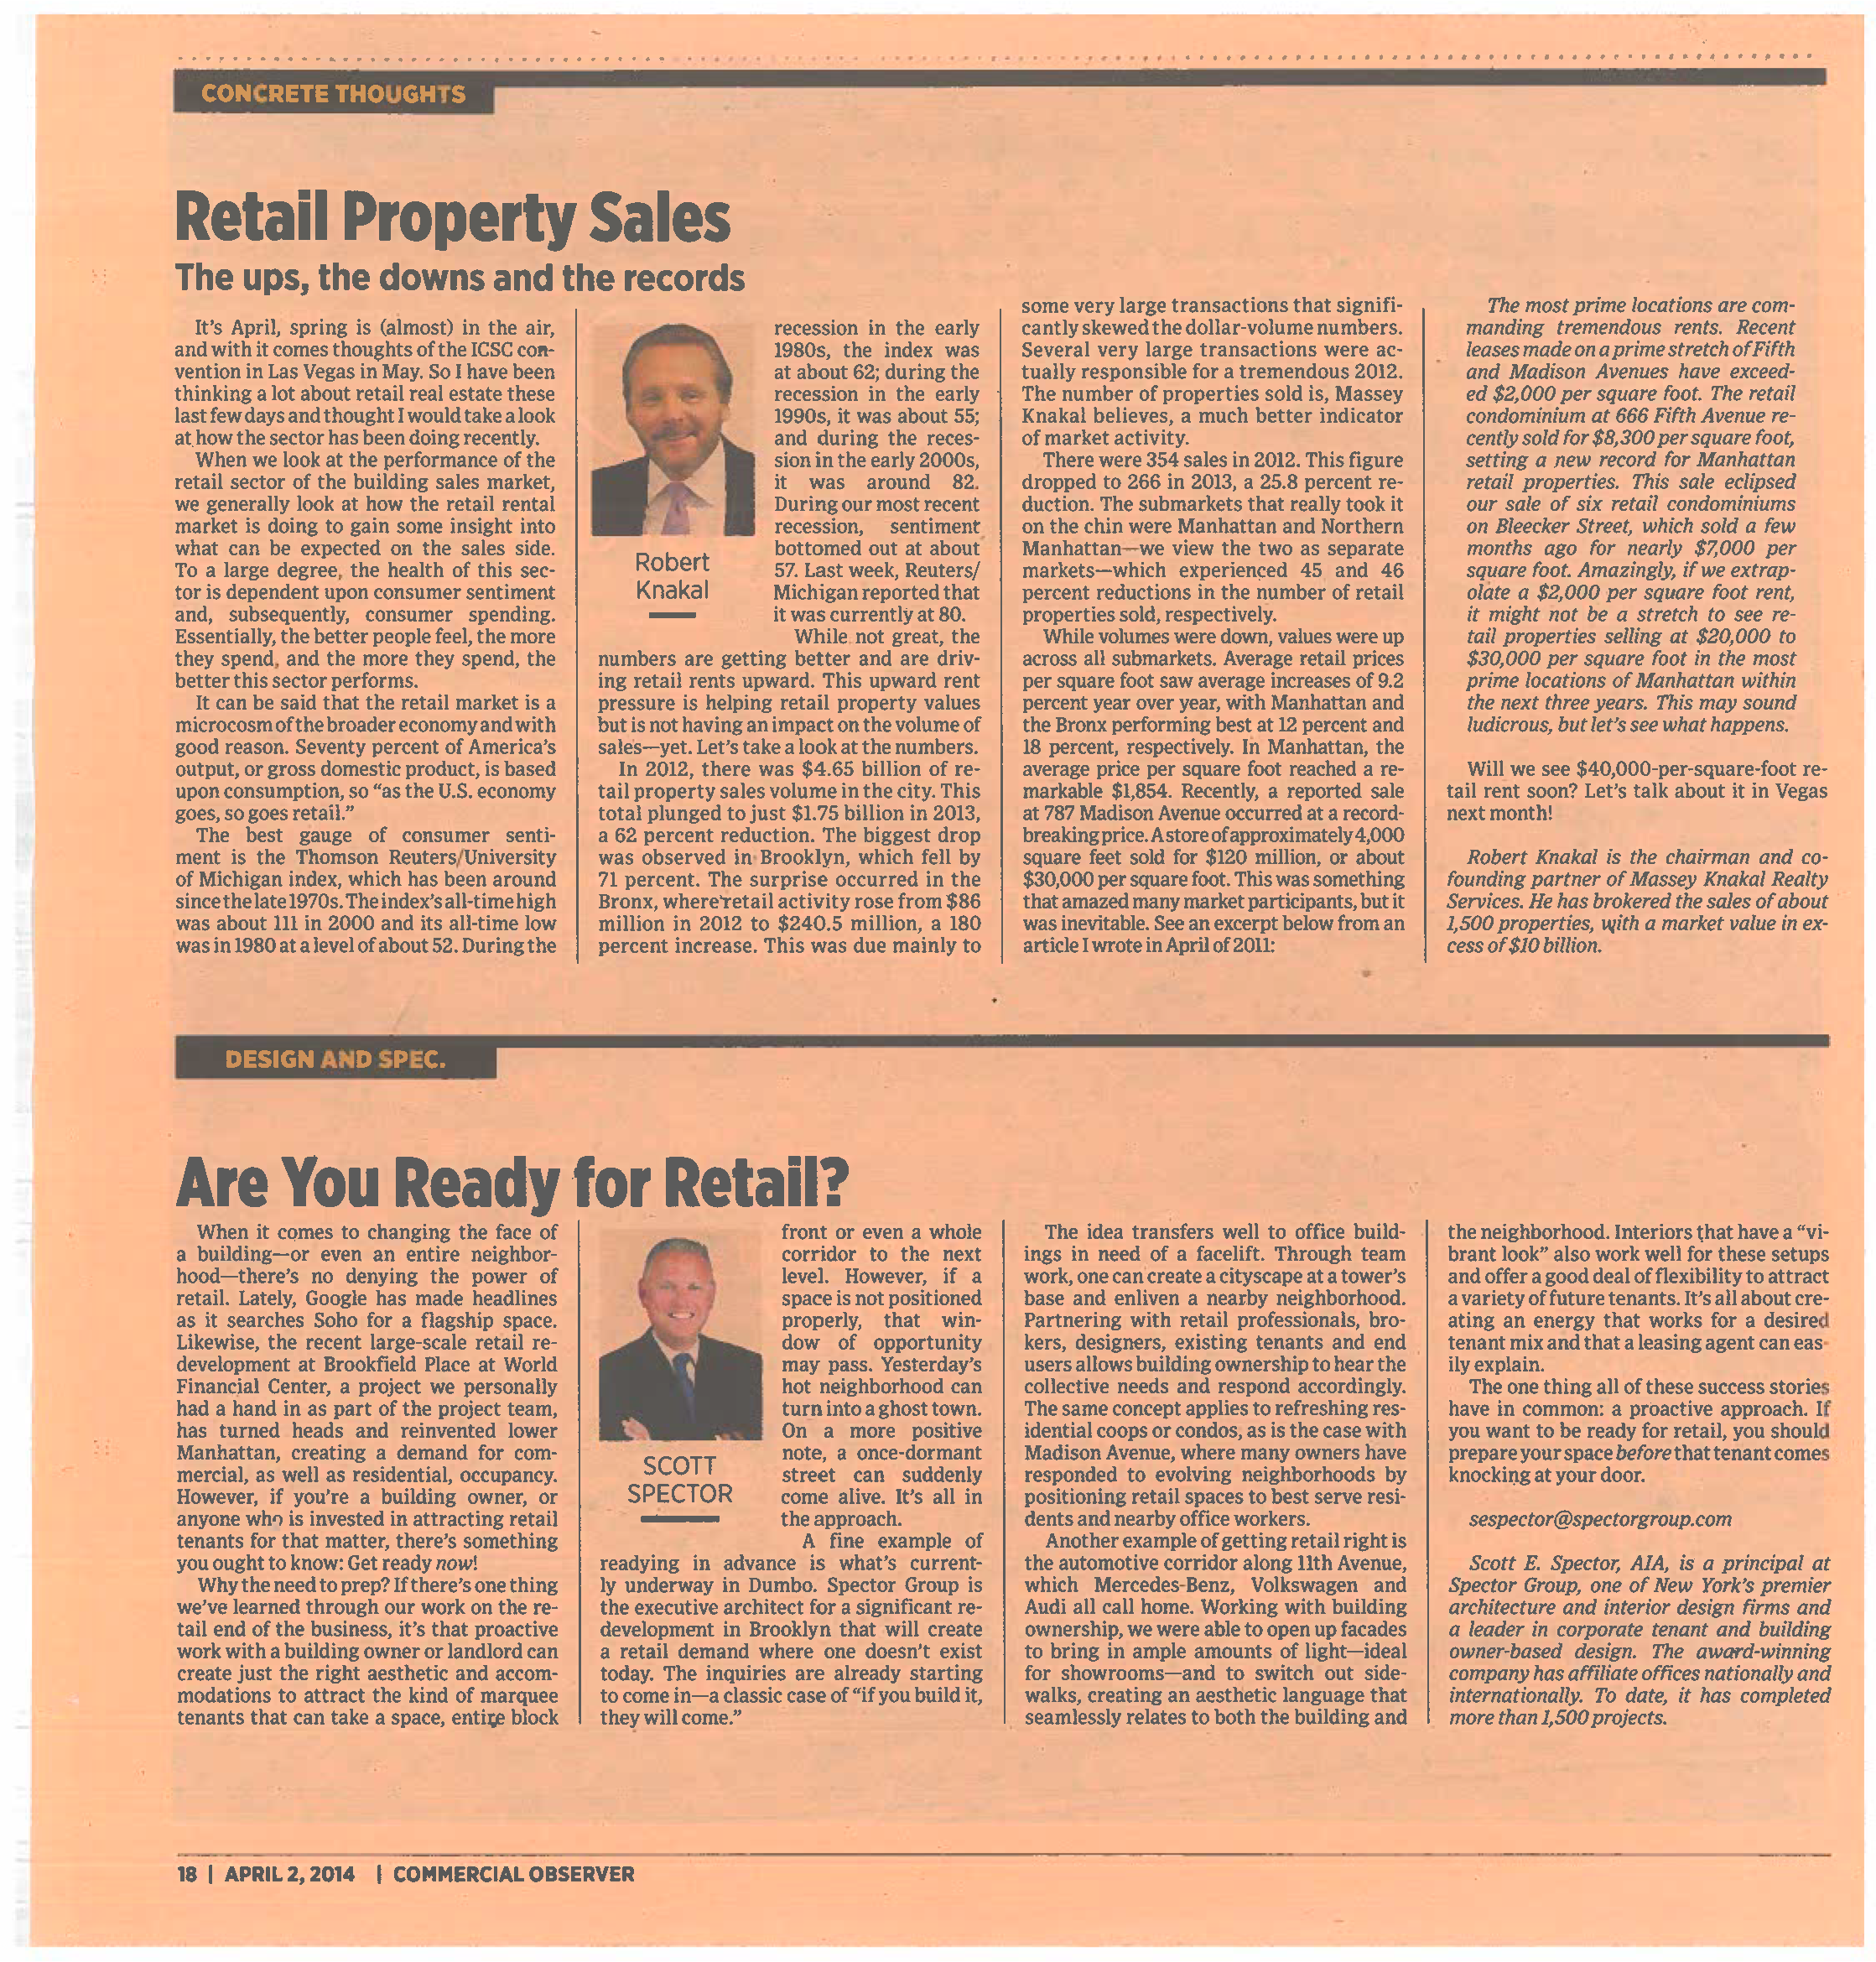 Concrete Thoughts - Retail Property Sales - April 2 2014